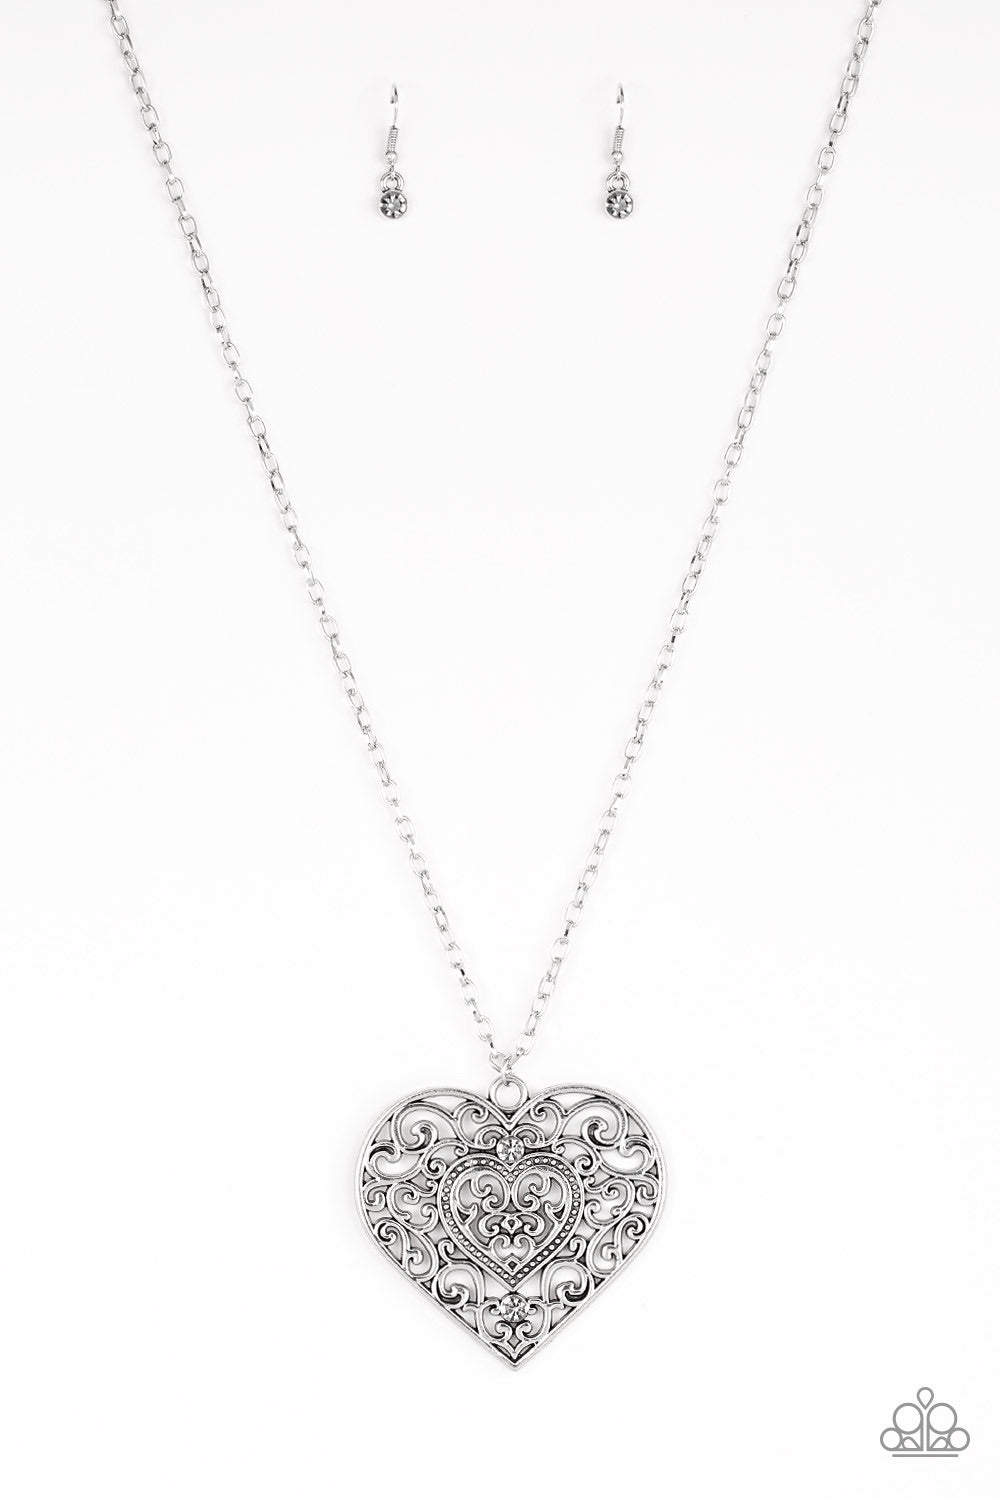 Paparazzi Classic Casanova - Silver Necklace - A Finishing Touch Jewelry